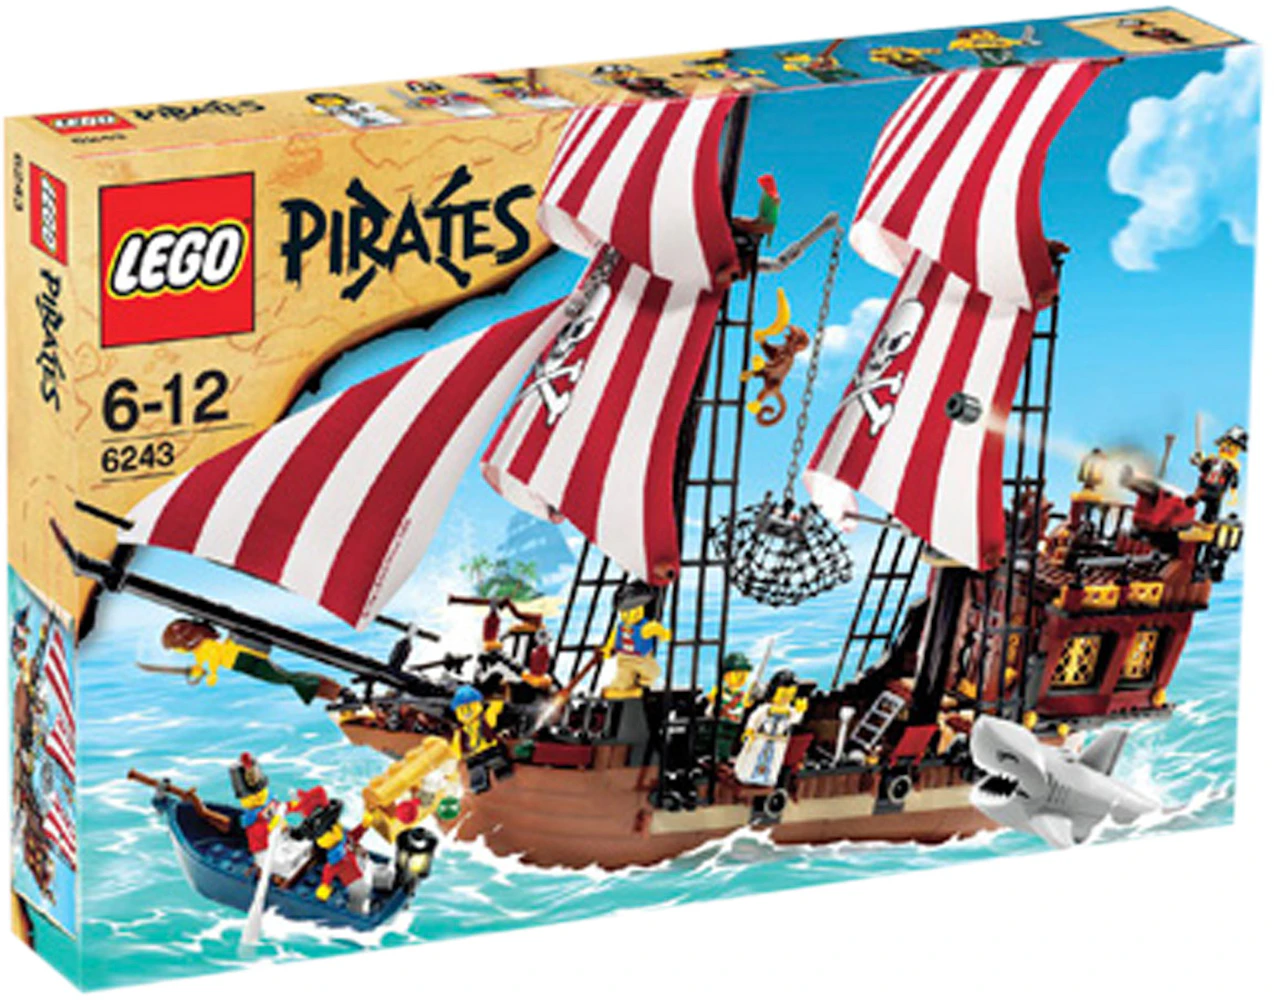 LEGO Pirates Brickbeard's Bounty Set 6243 - IT